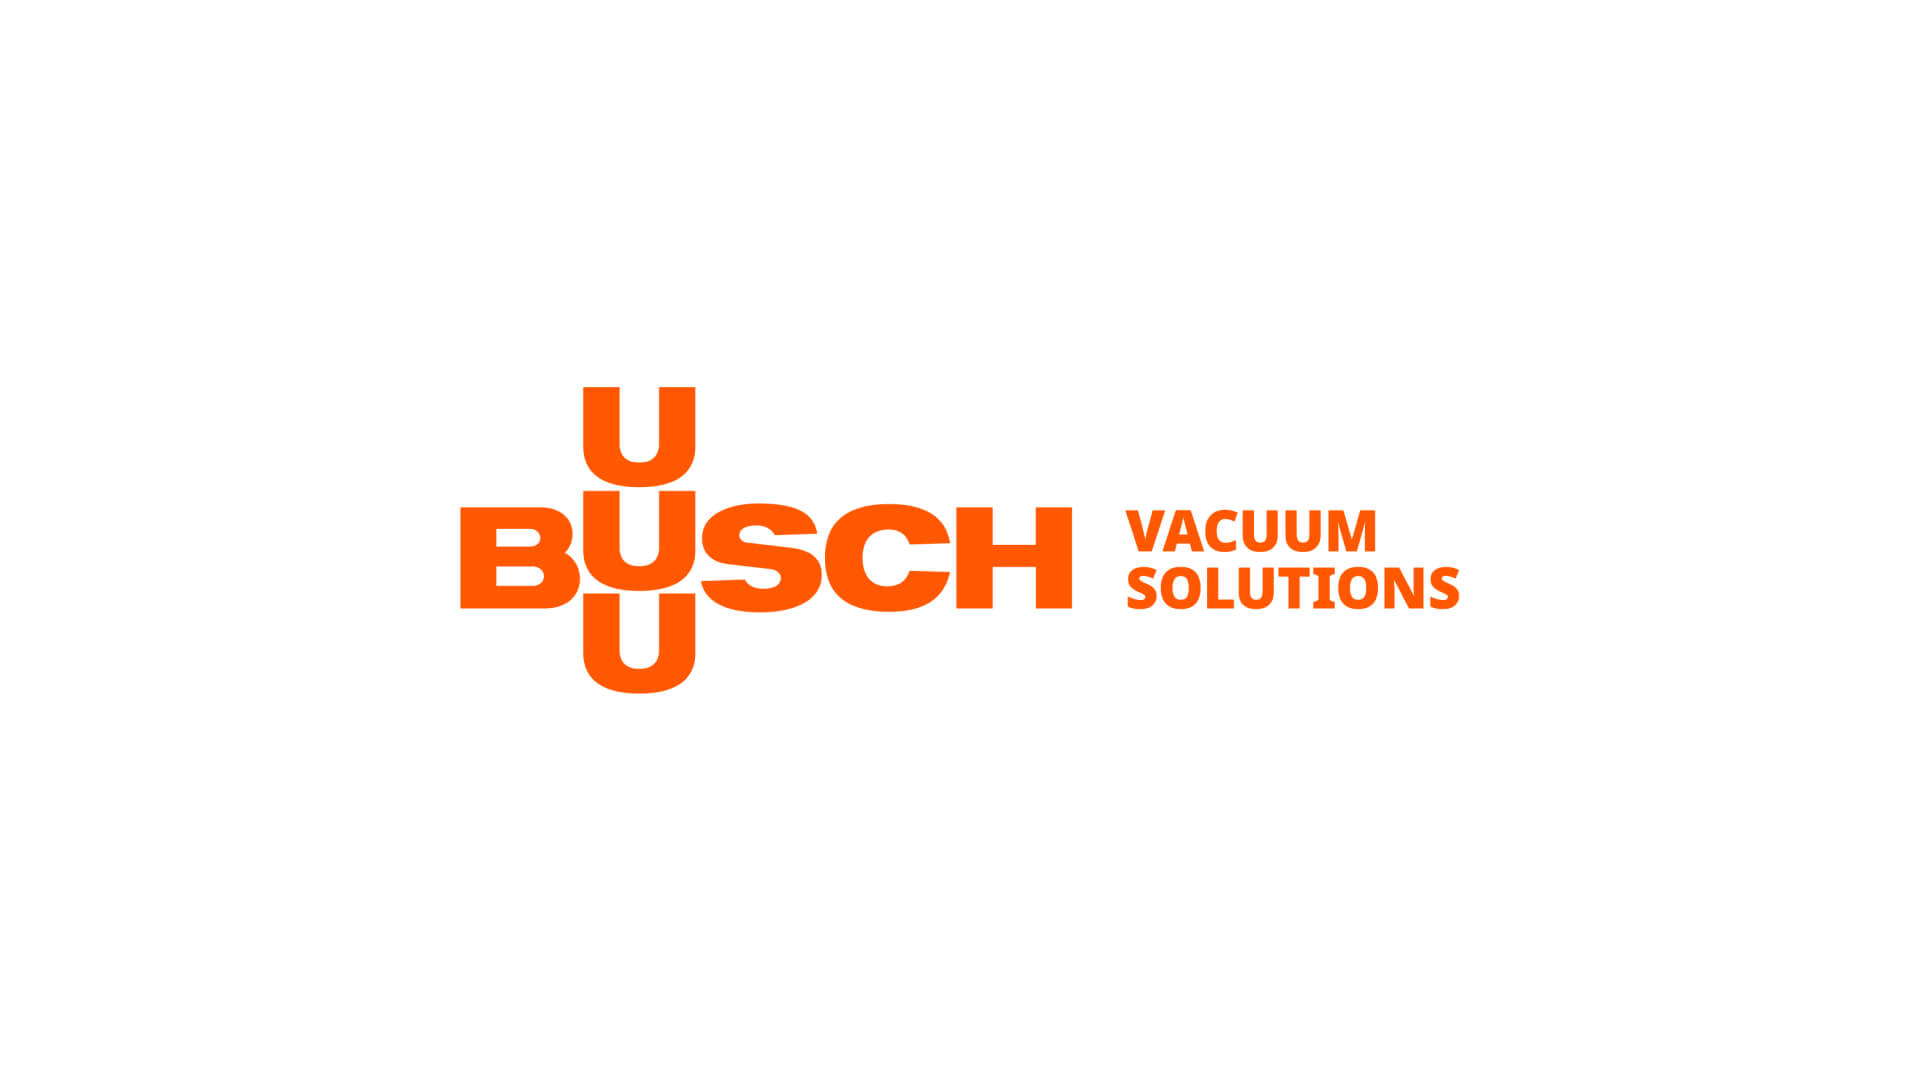 Busch Vacuum Solutions logo in color